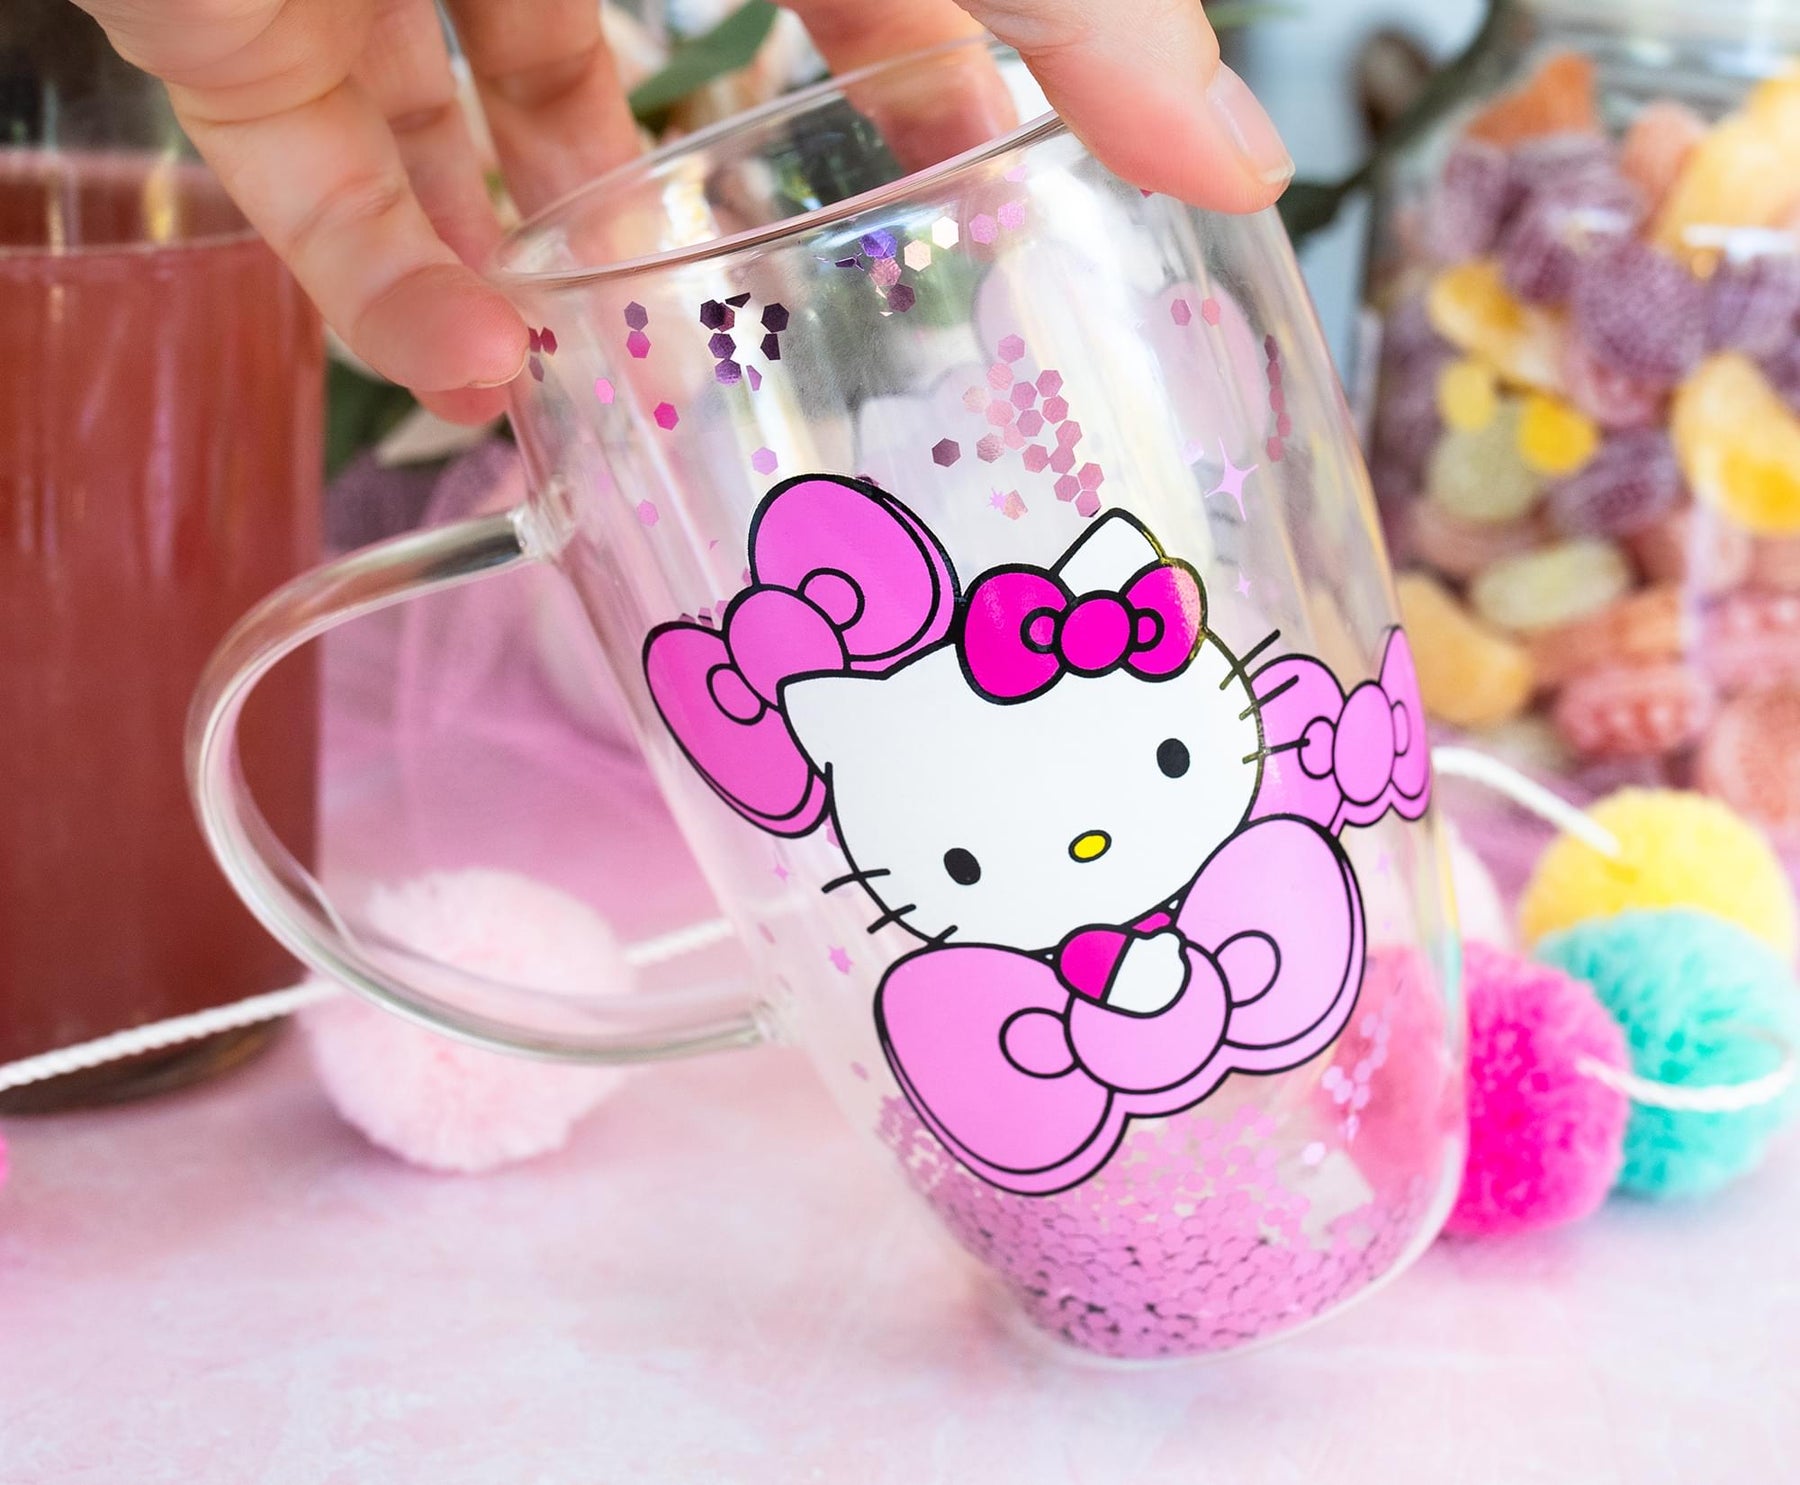 Sanrio Hello Kitty Unicorn Glass Mug with Glitter Handle | Holds 14 Ounces